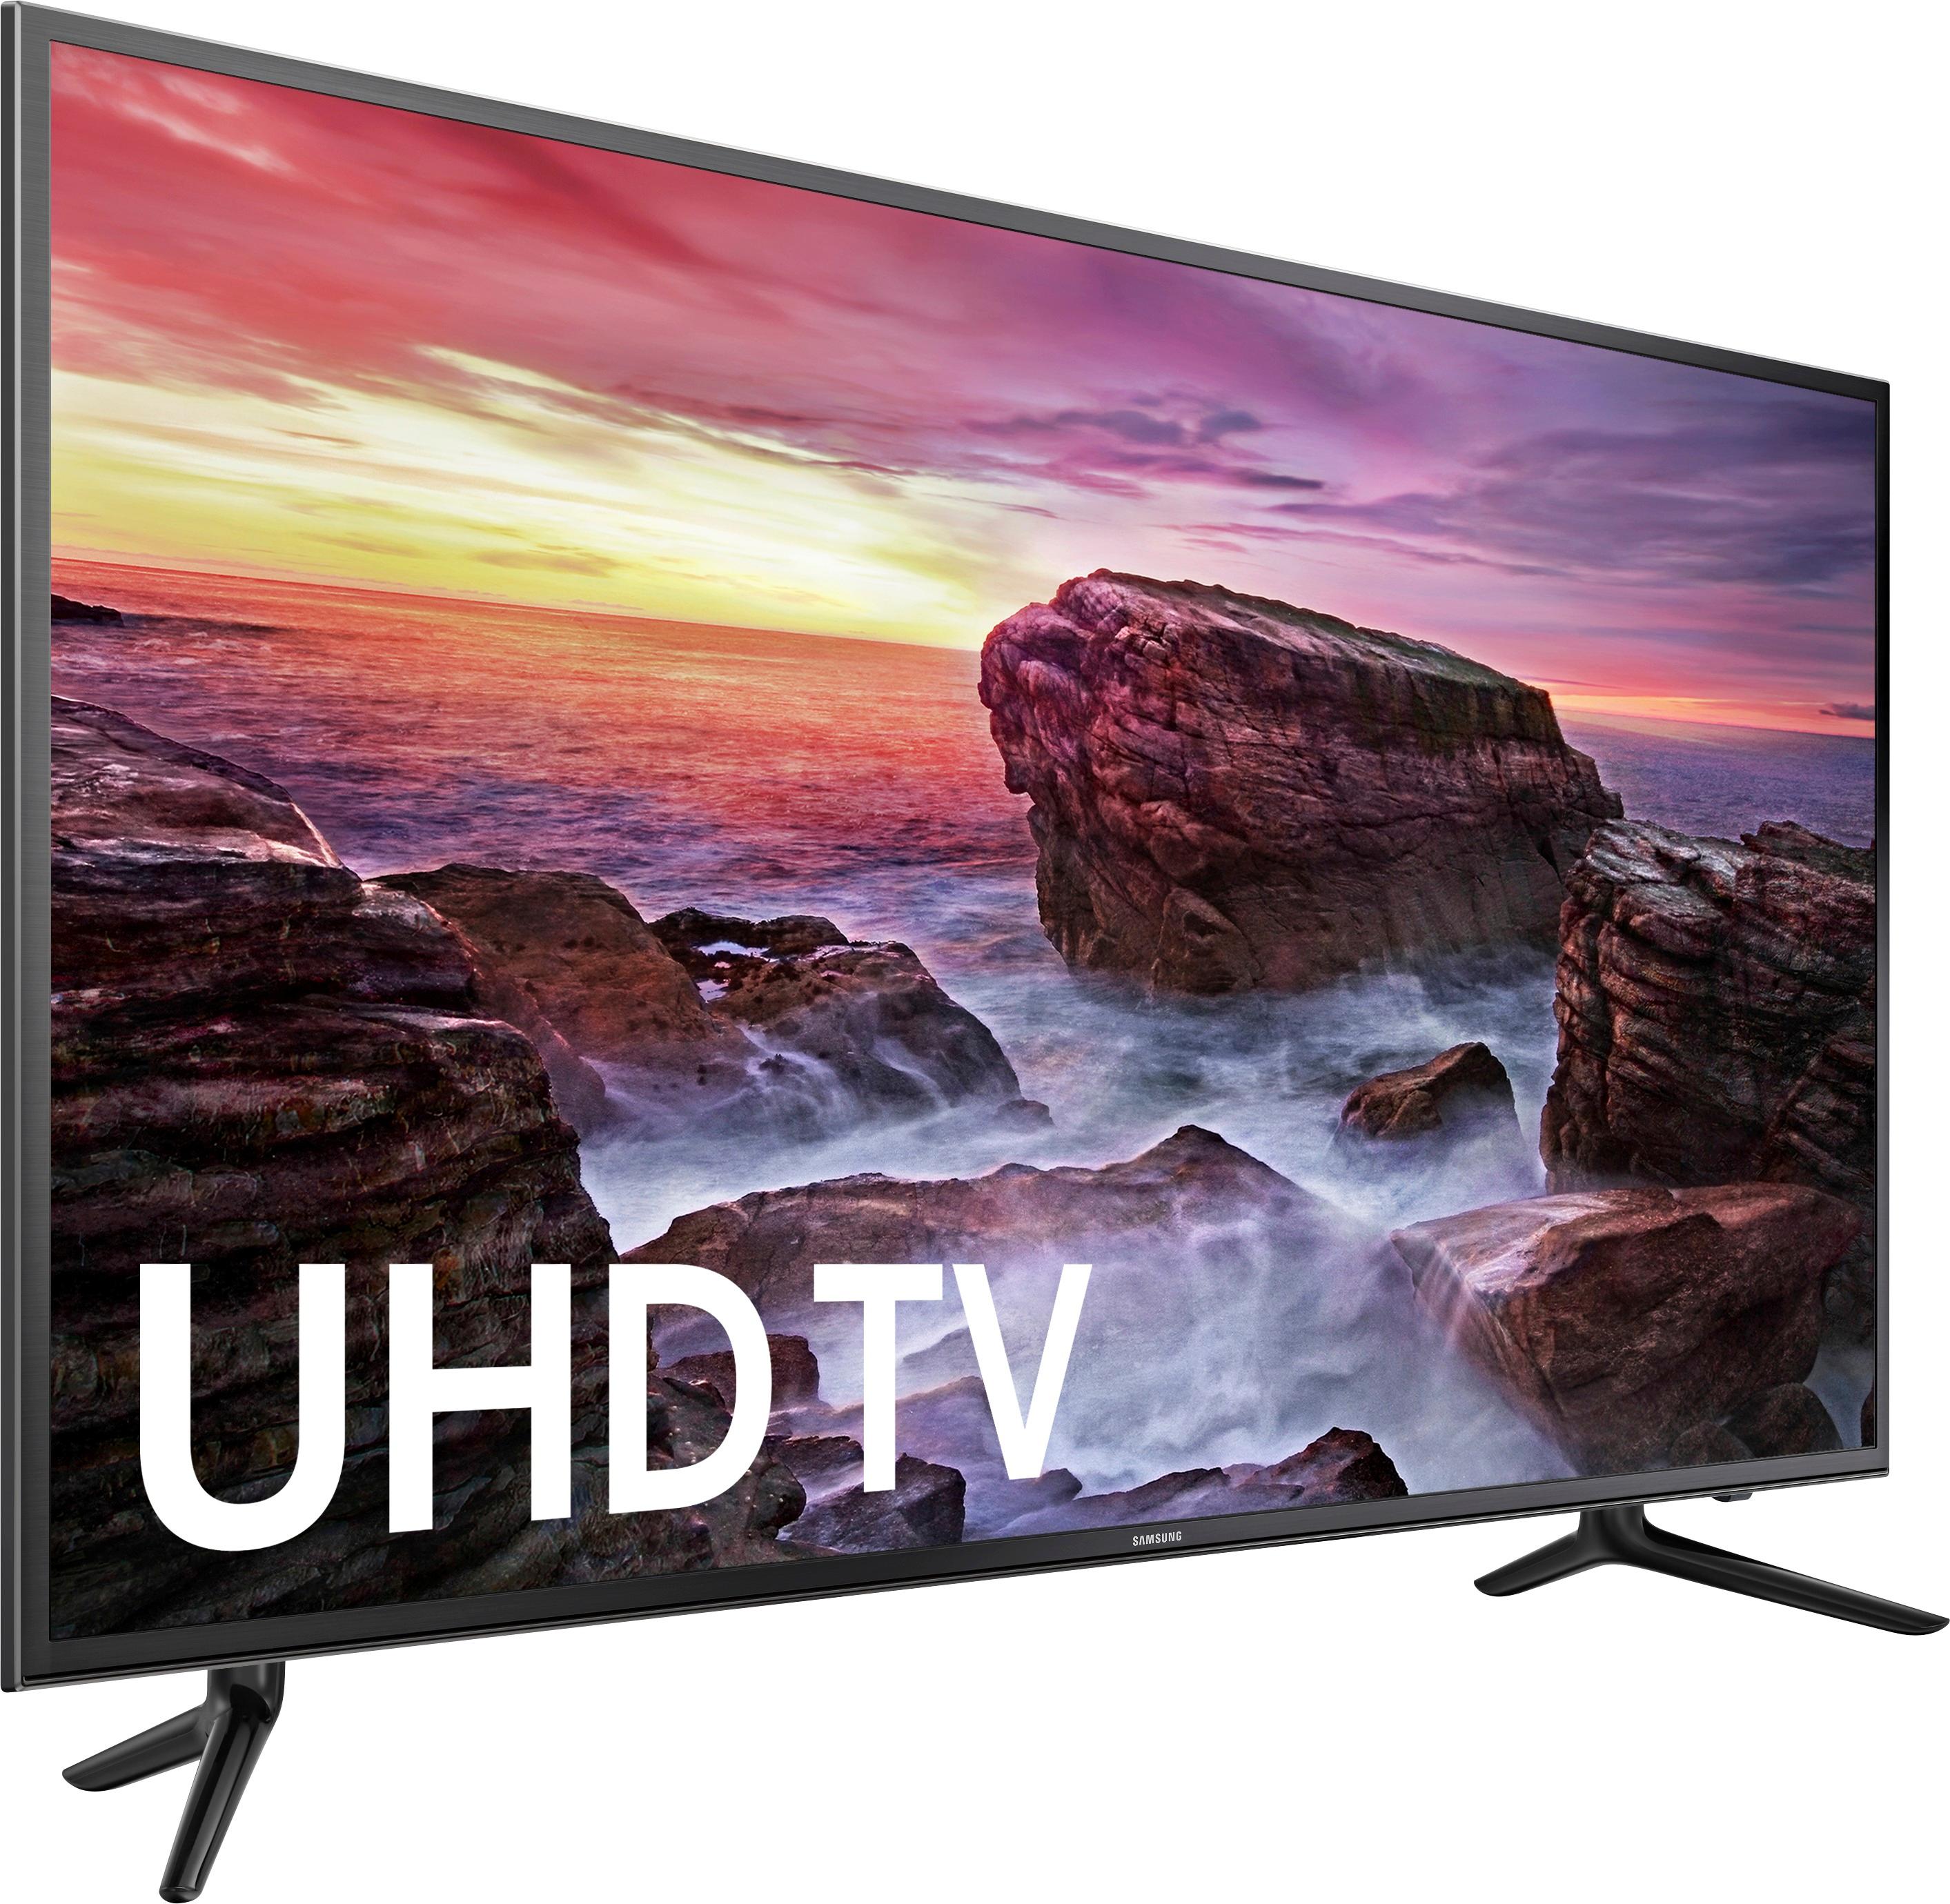 Buy: Samsung Class LED MU6100 Series 2160p Smart 4K Ultra HD TV HDR